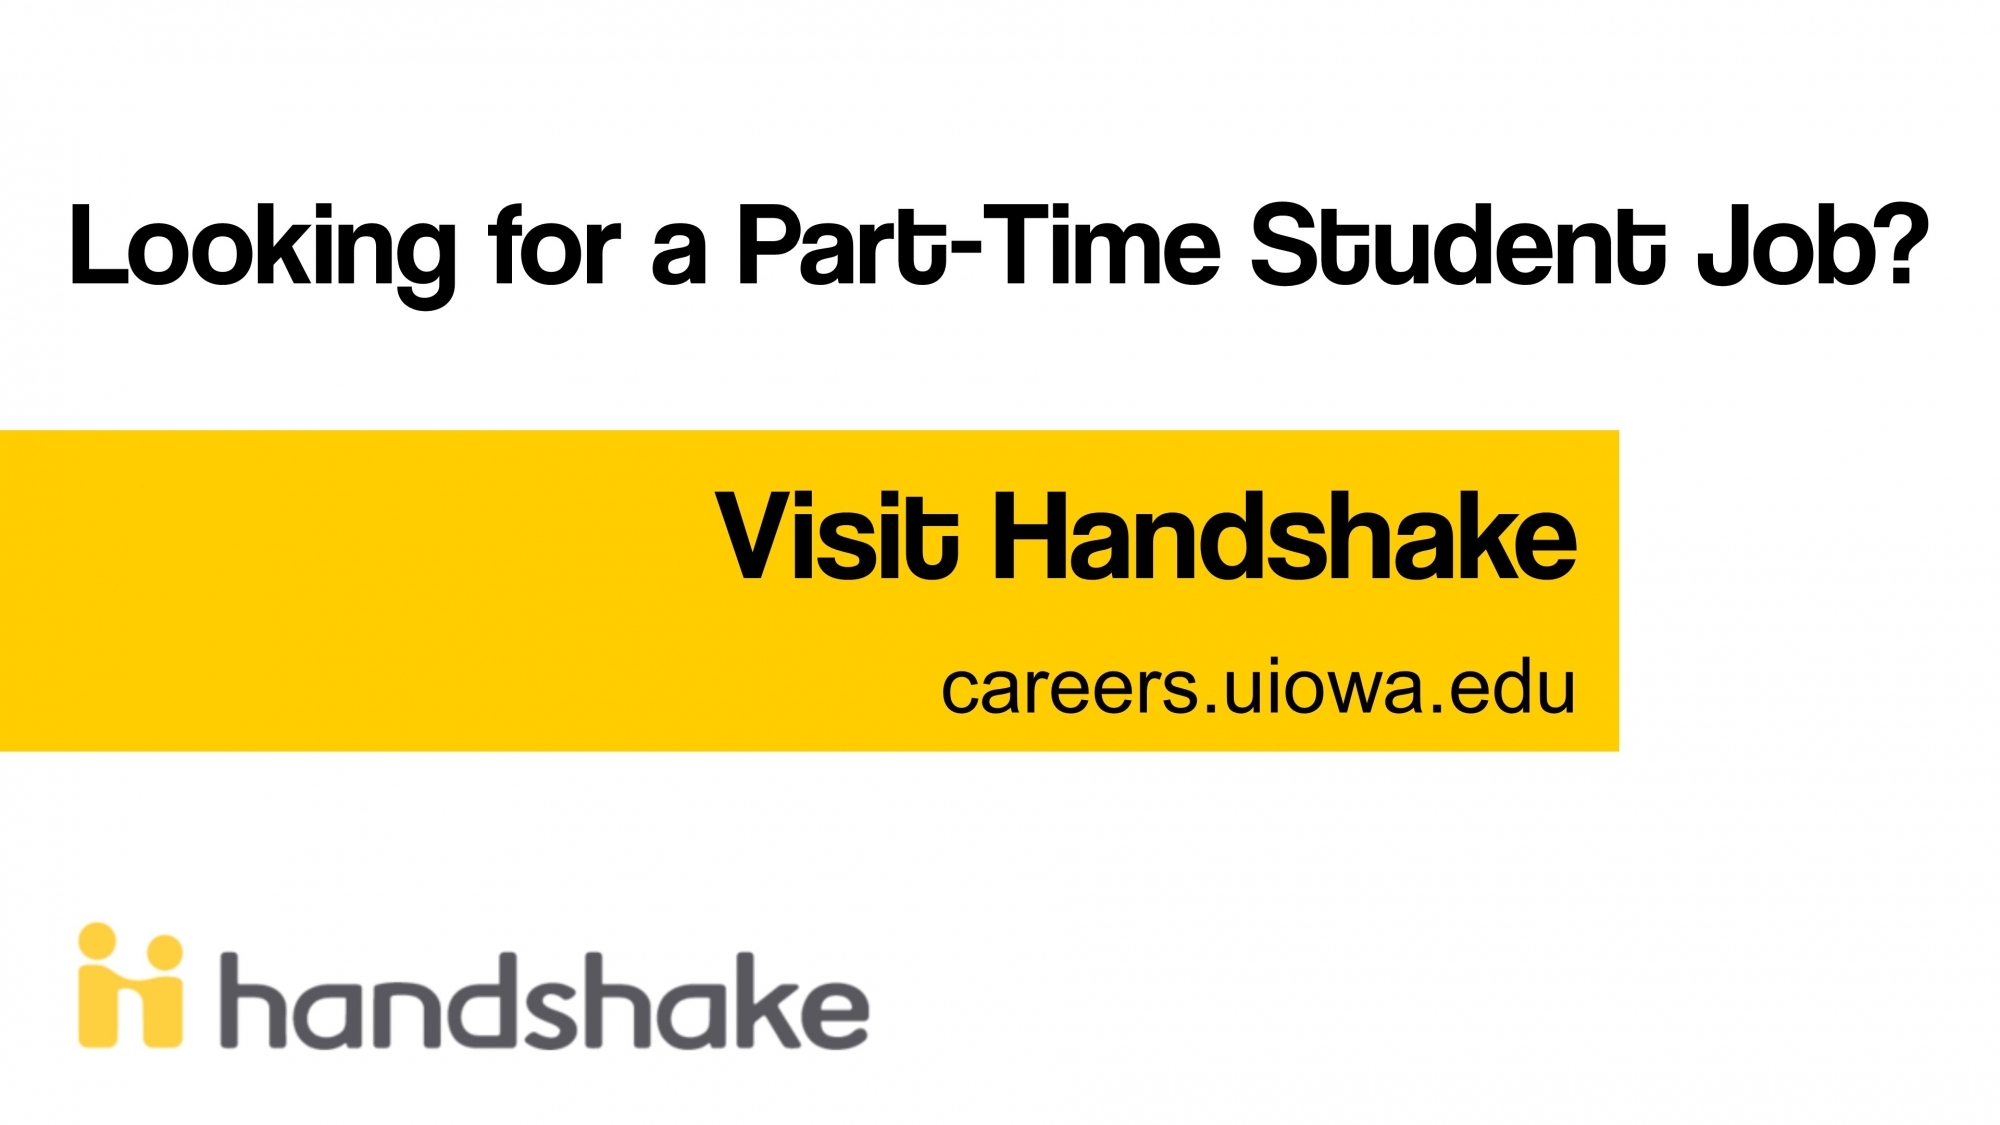 Visit Handshake for a Part-time student job